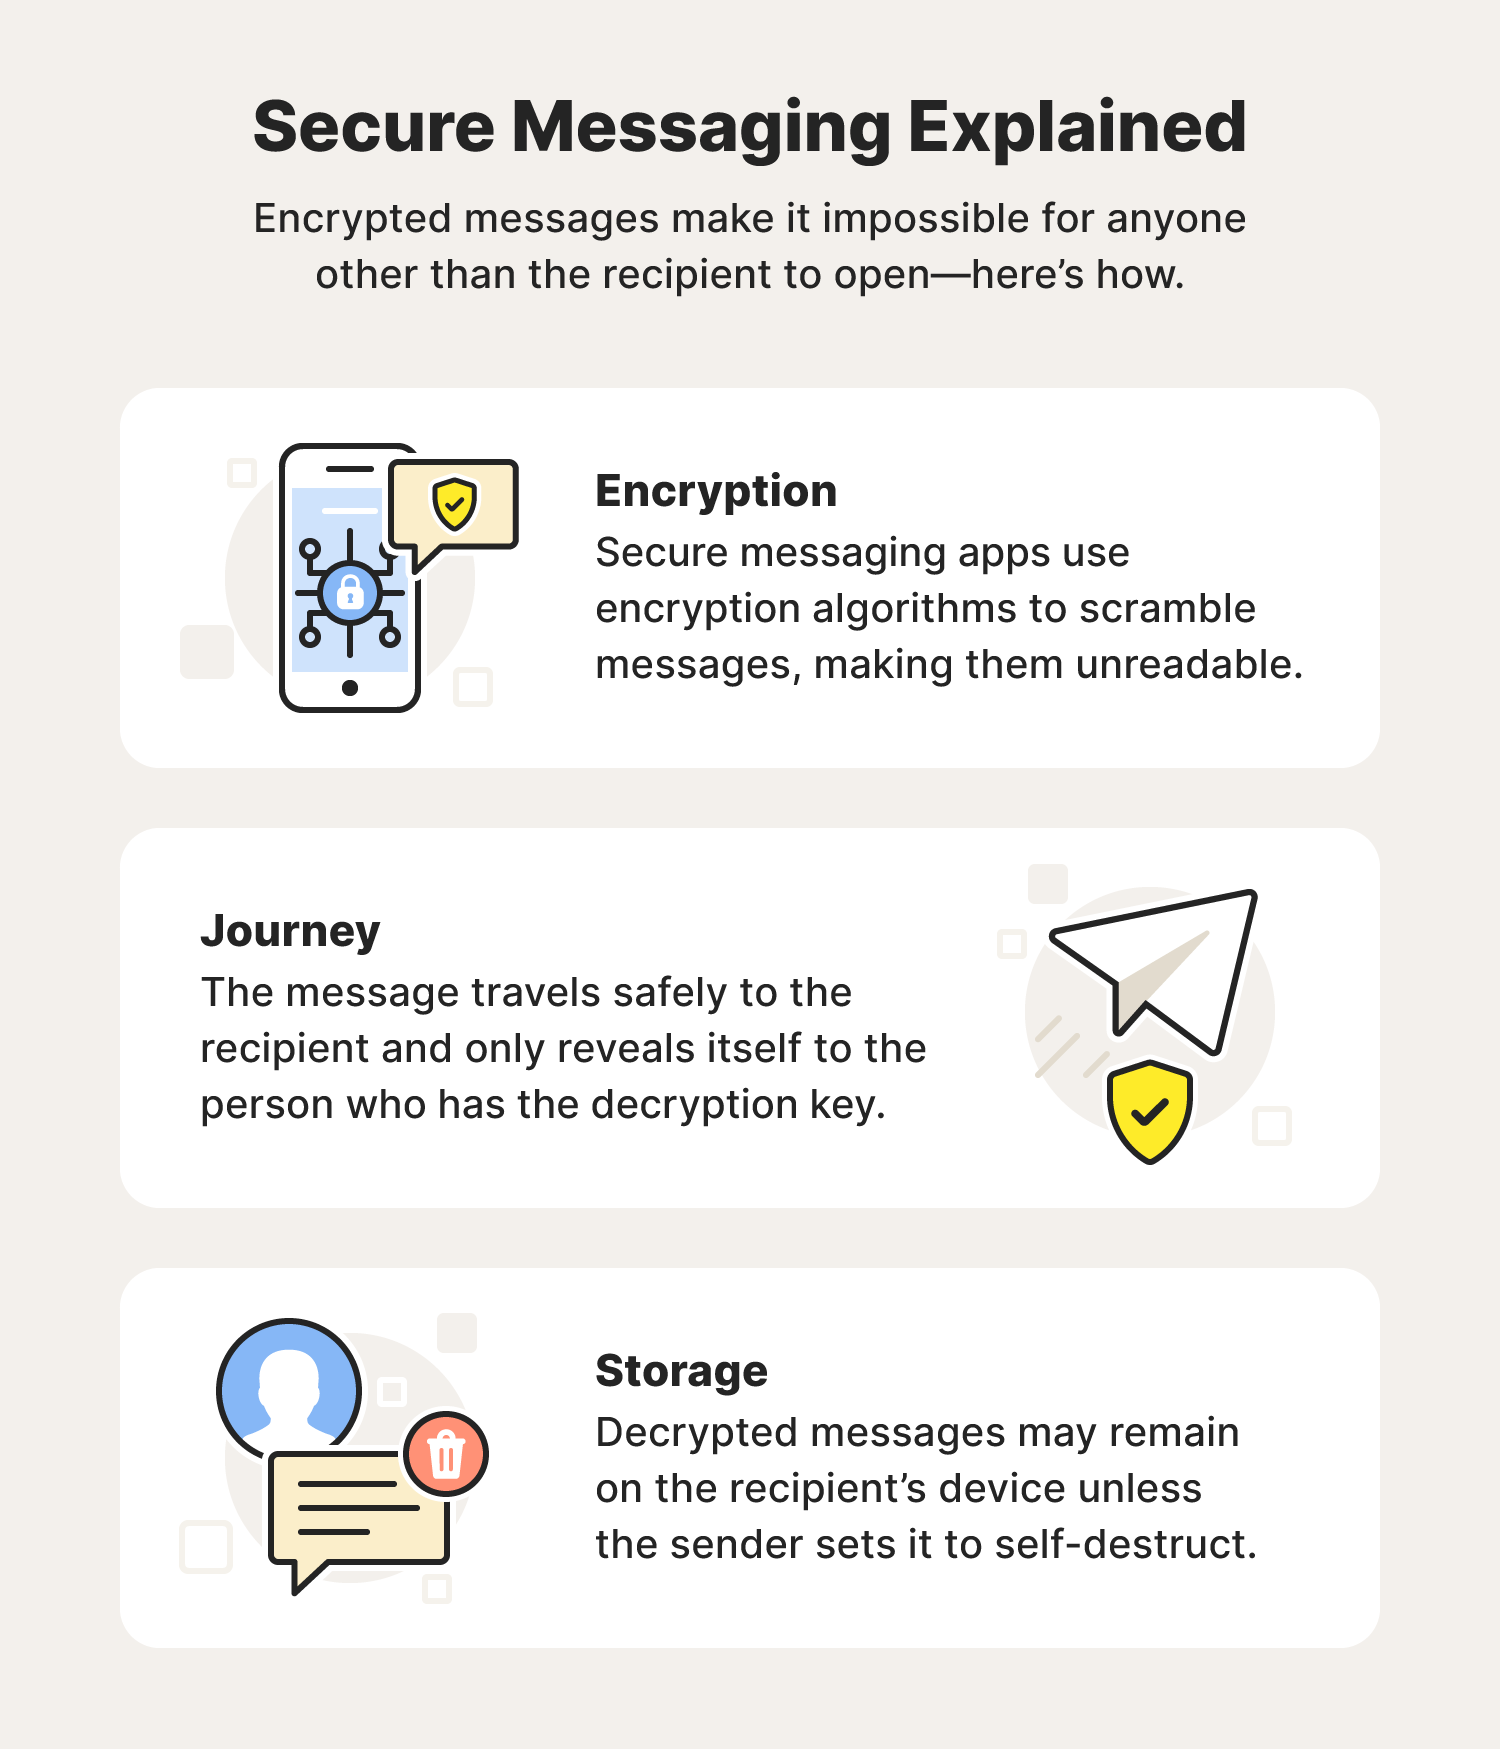 Image explaining how secure messaging works by utilizing encryption.